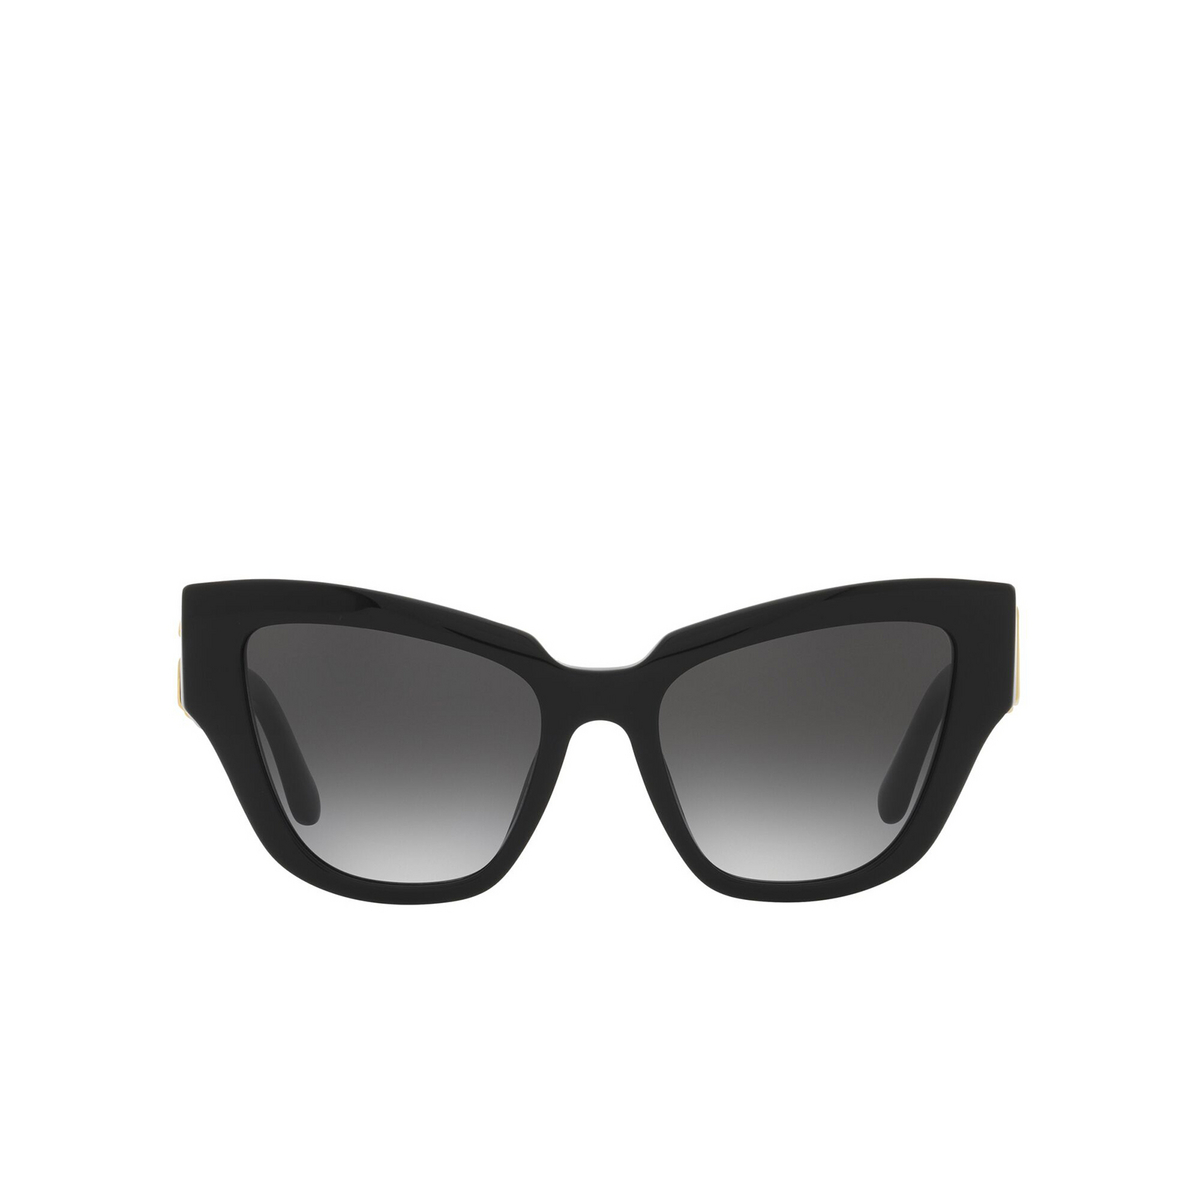 Dolce & Gabbana DG4404 Sunglasses 501/8G Black - front view